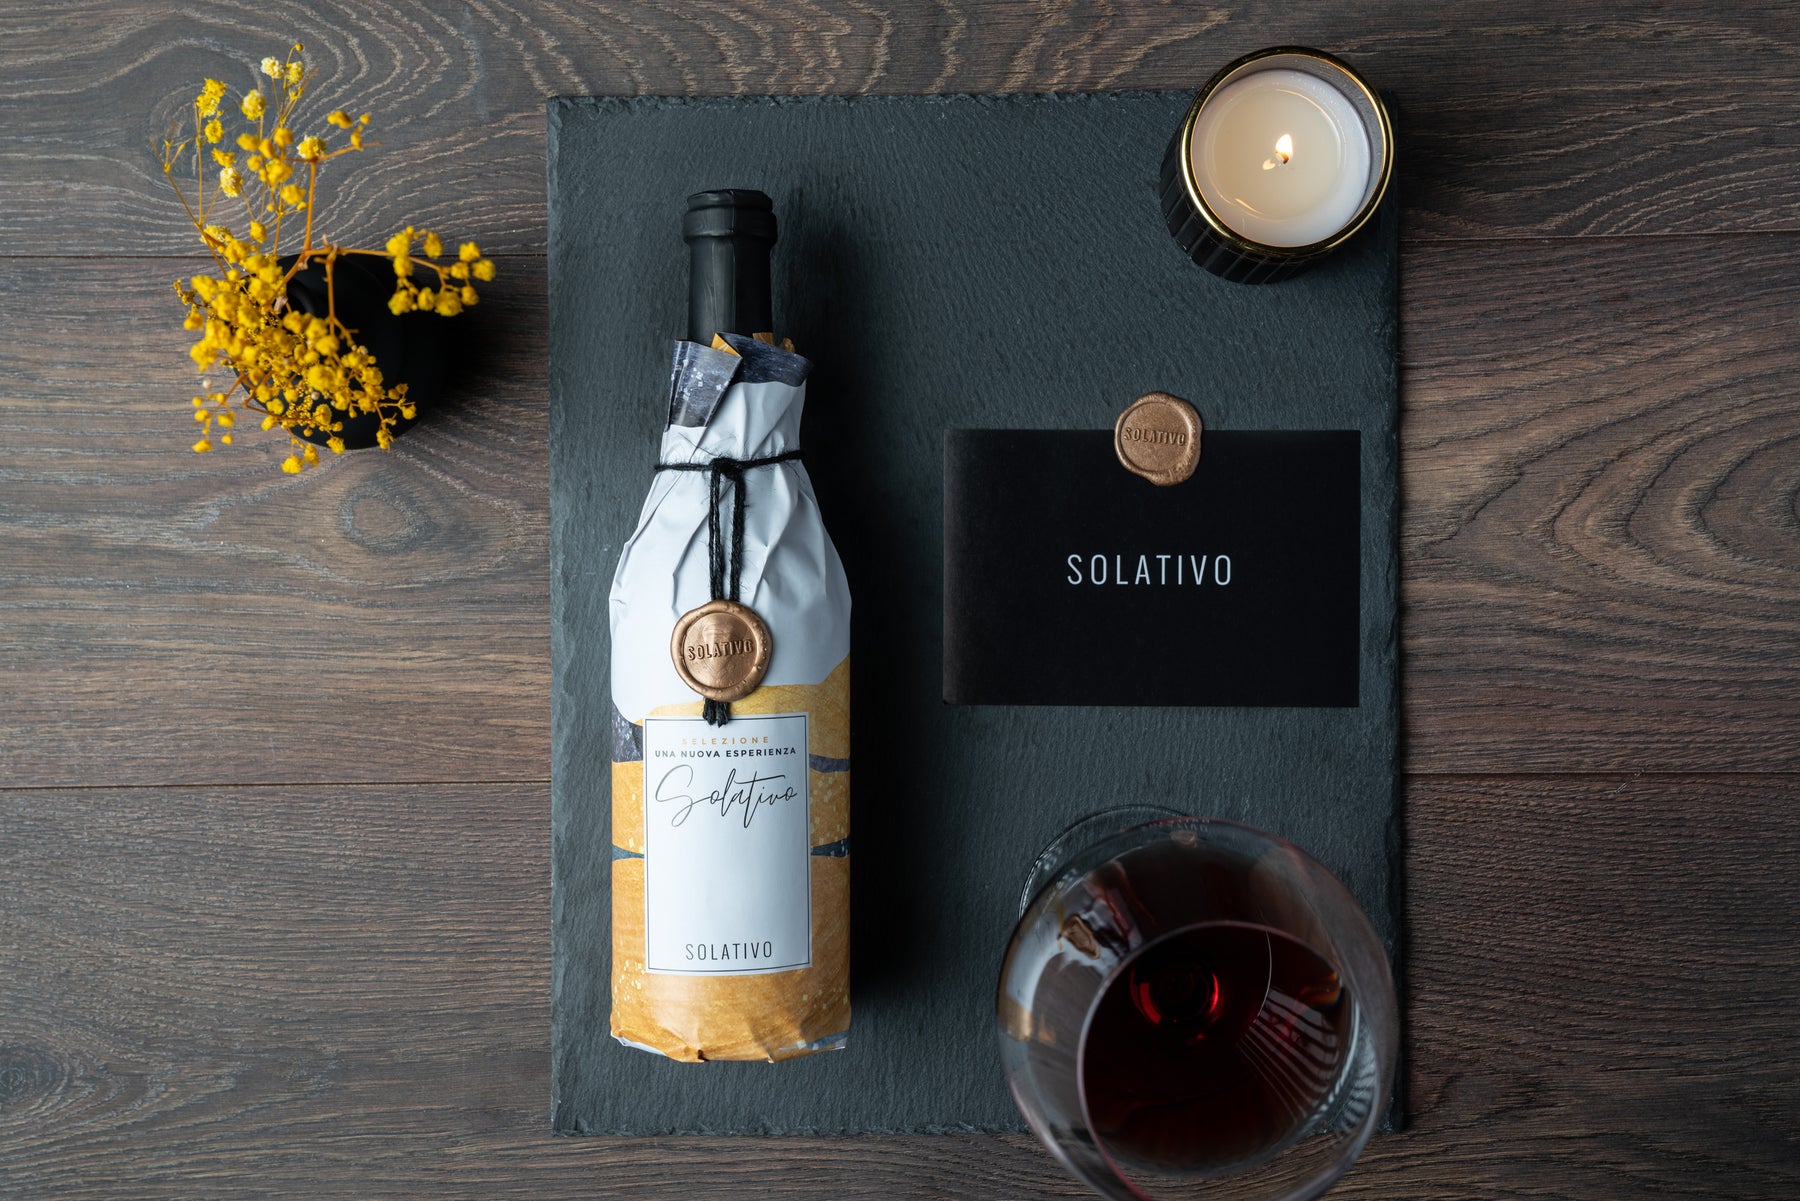 2020 Tenuta di Trinoro Le Cupole Rosso Toscana IGT – Kogod Wine Merchant